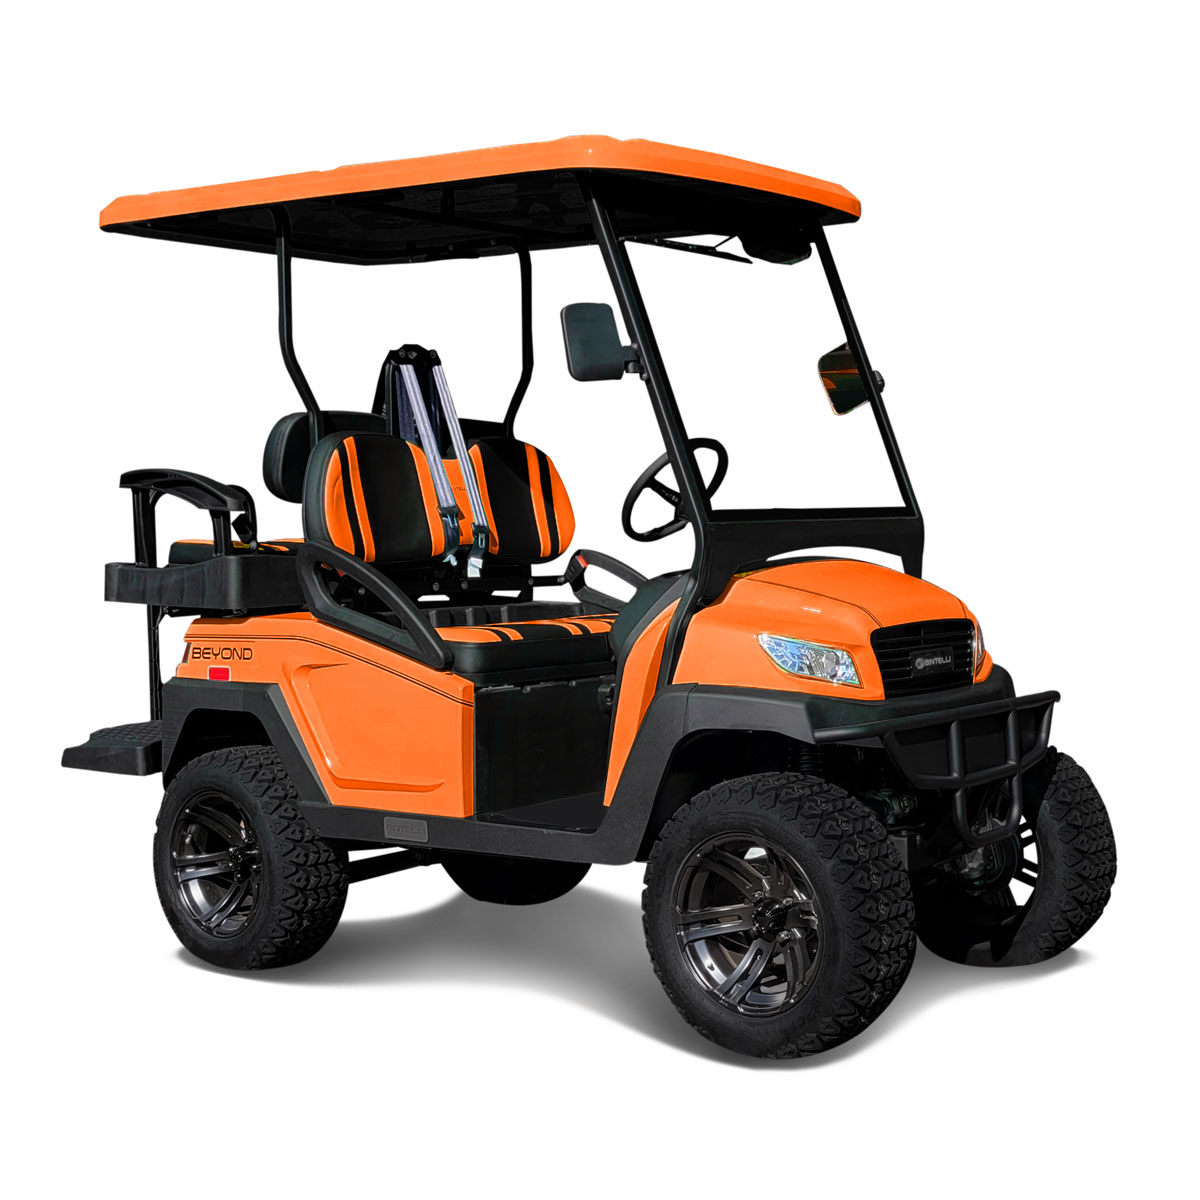 Bintelli Beyond Lifted 4PR street legal golf cart in Bright Orange